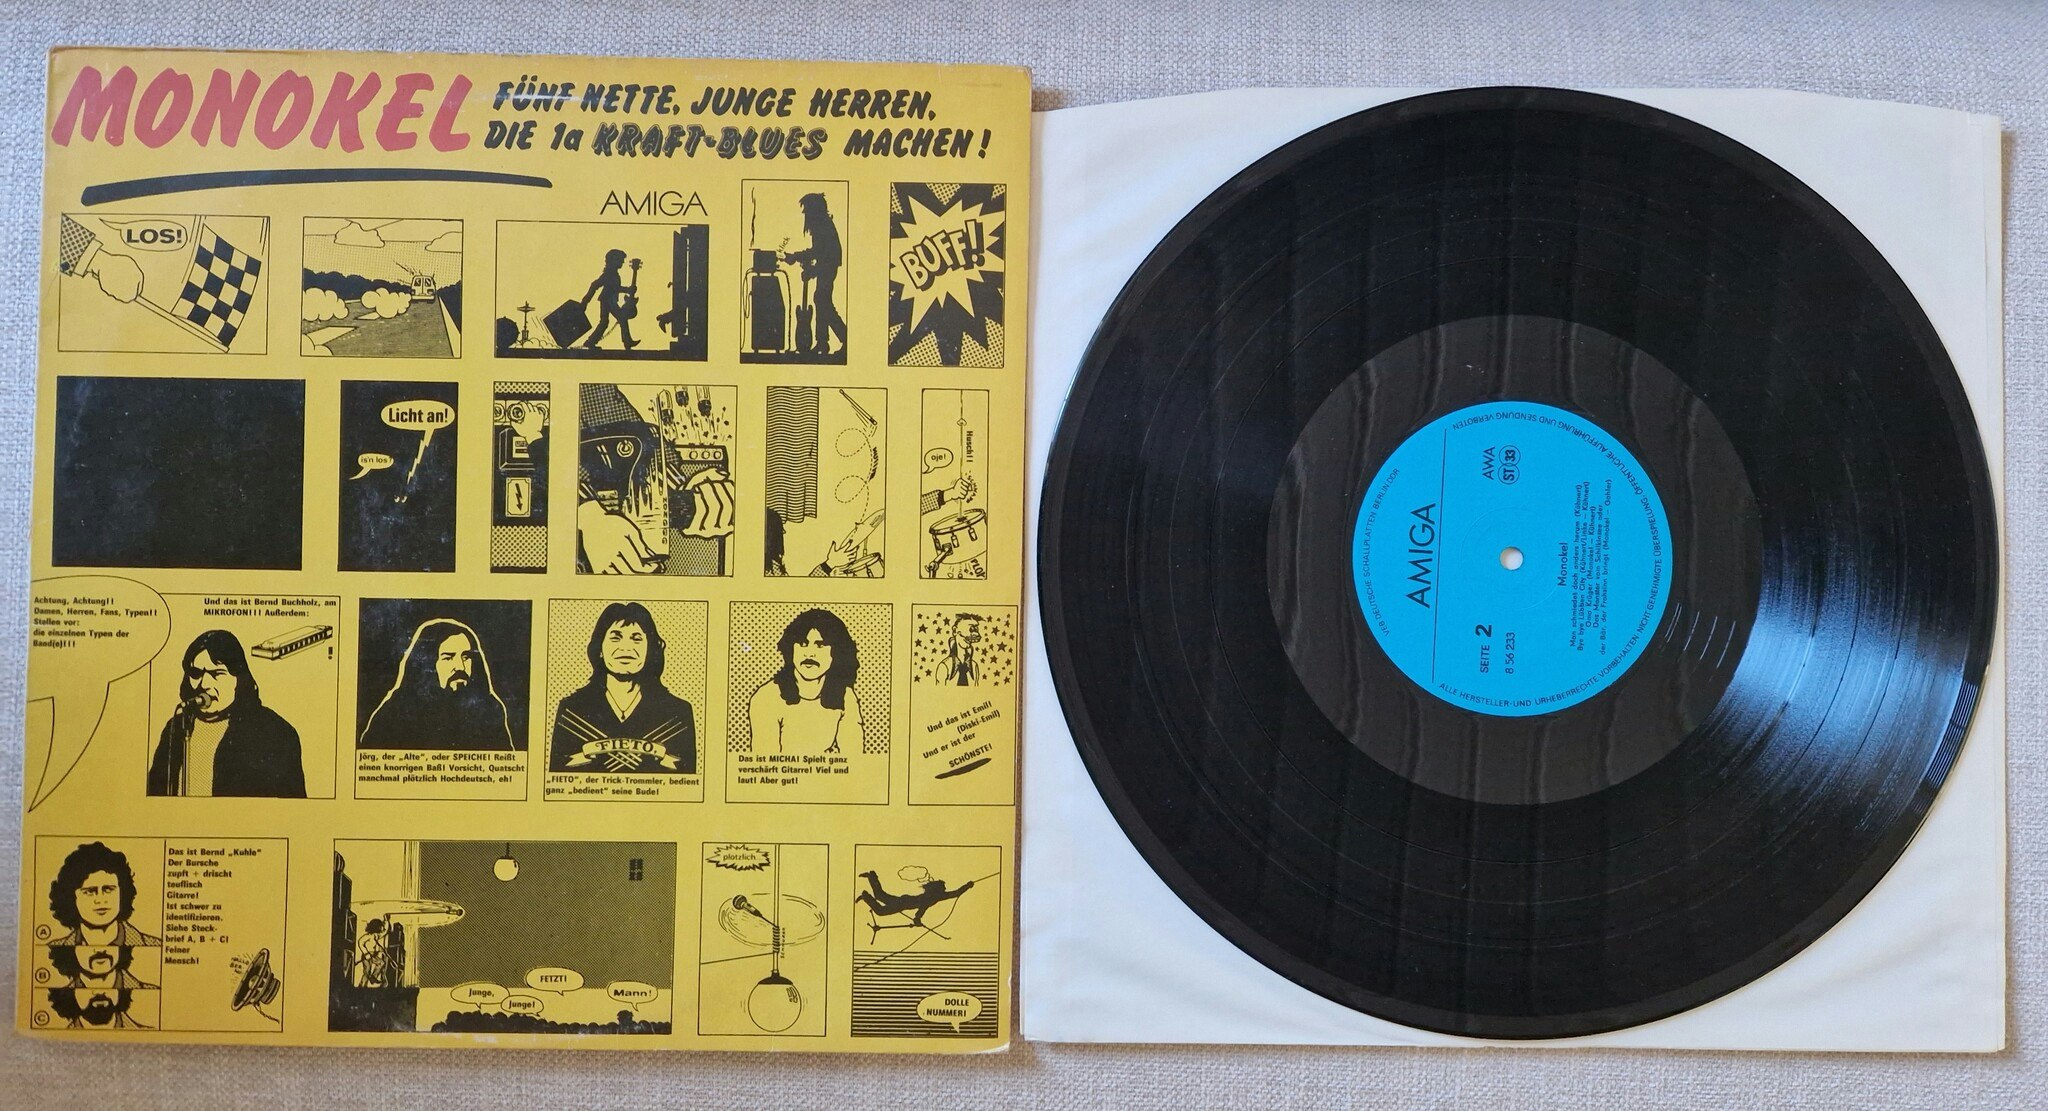 Monokel, Fünf Nette, Junge Herren, Die 1a Kraft-Blues Machen !. Vinyl LP